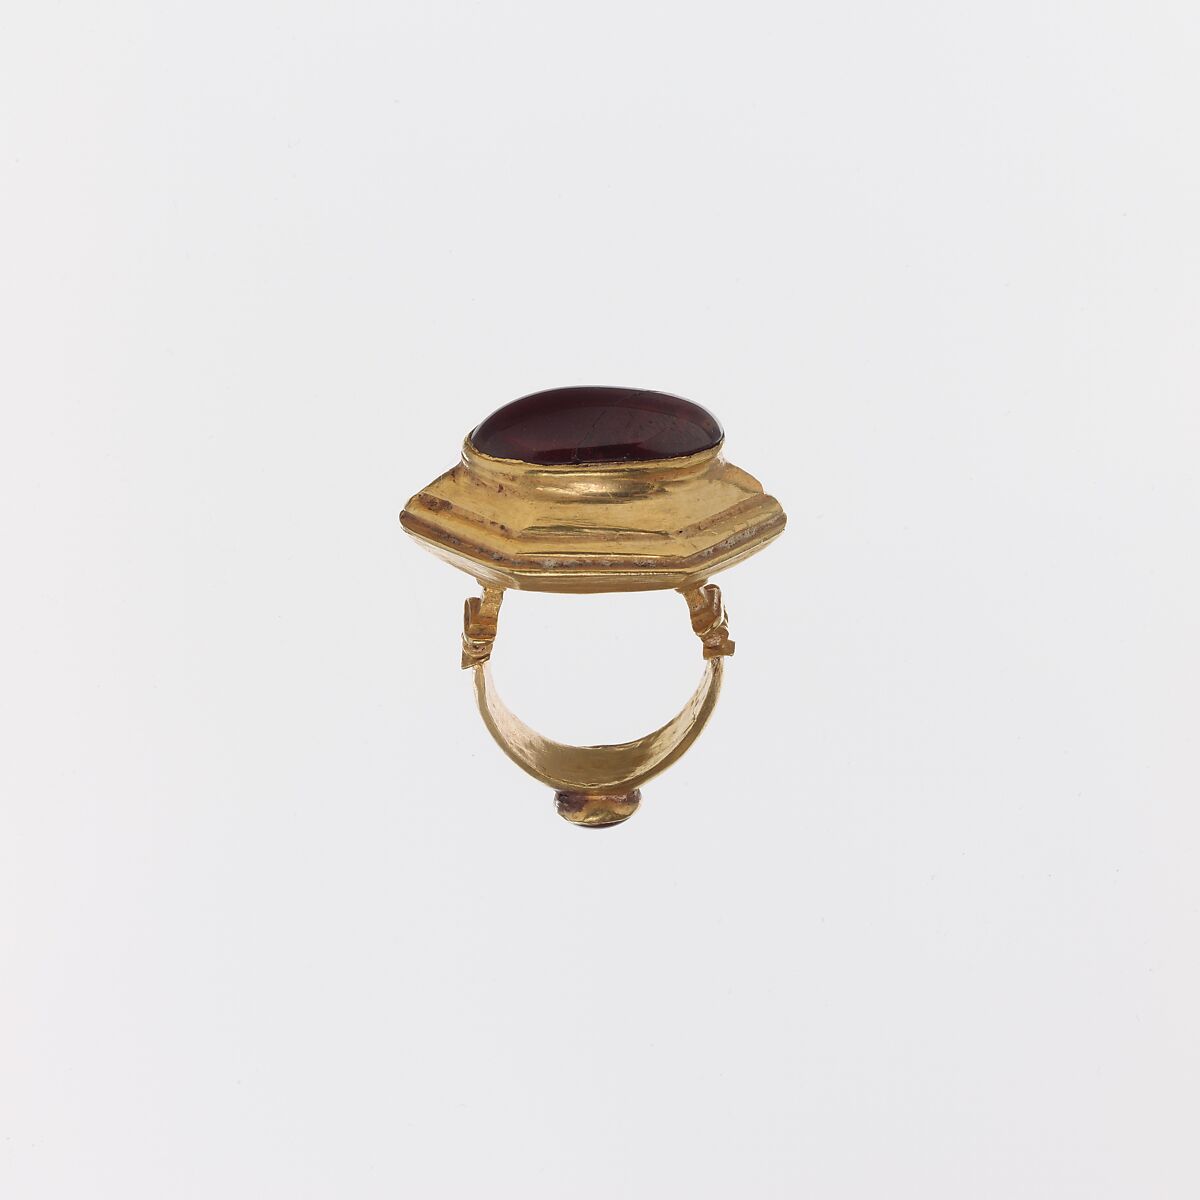 Gold and cabochon garnet ring